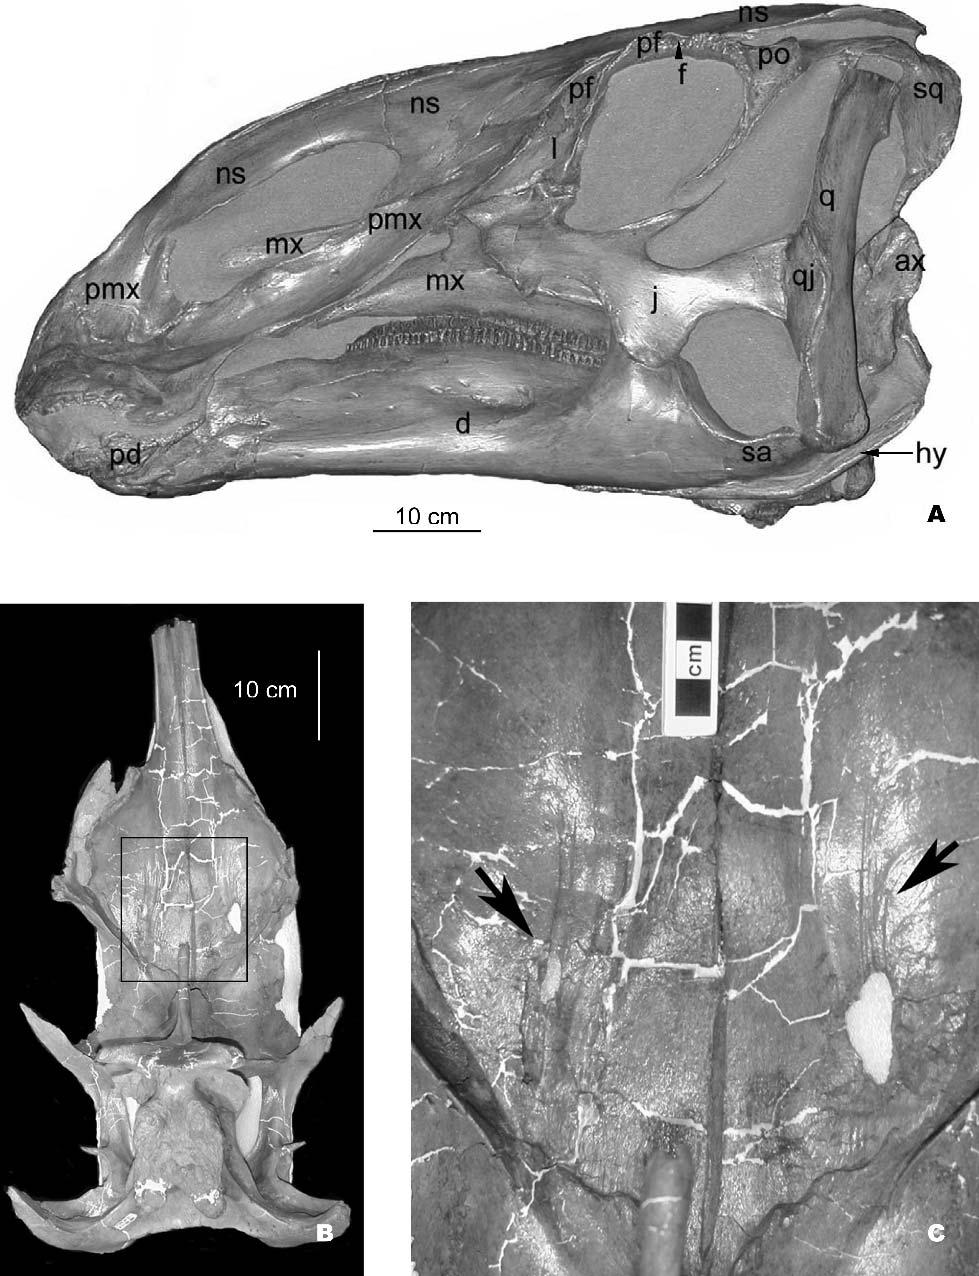 150 JOURNAL OF VERTEBRATE PALEONTOLOGY, VOL. 25, NO. 1, 2005 FIGURE 6. A, Brachylophosaurus canadensis skull, MOR 794, in left lateral view.